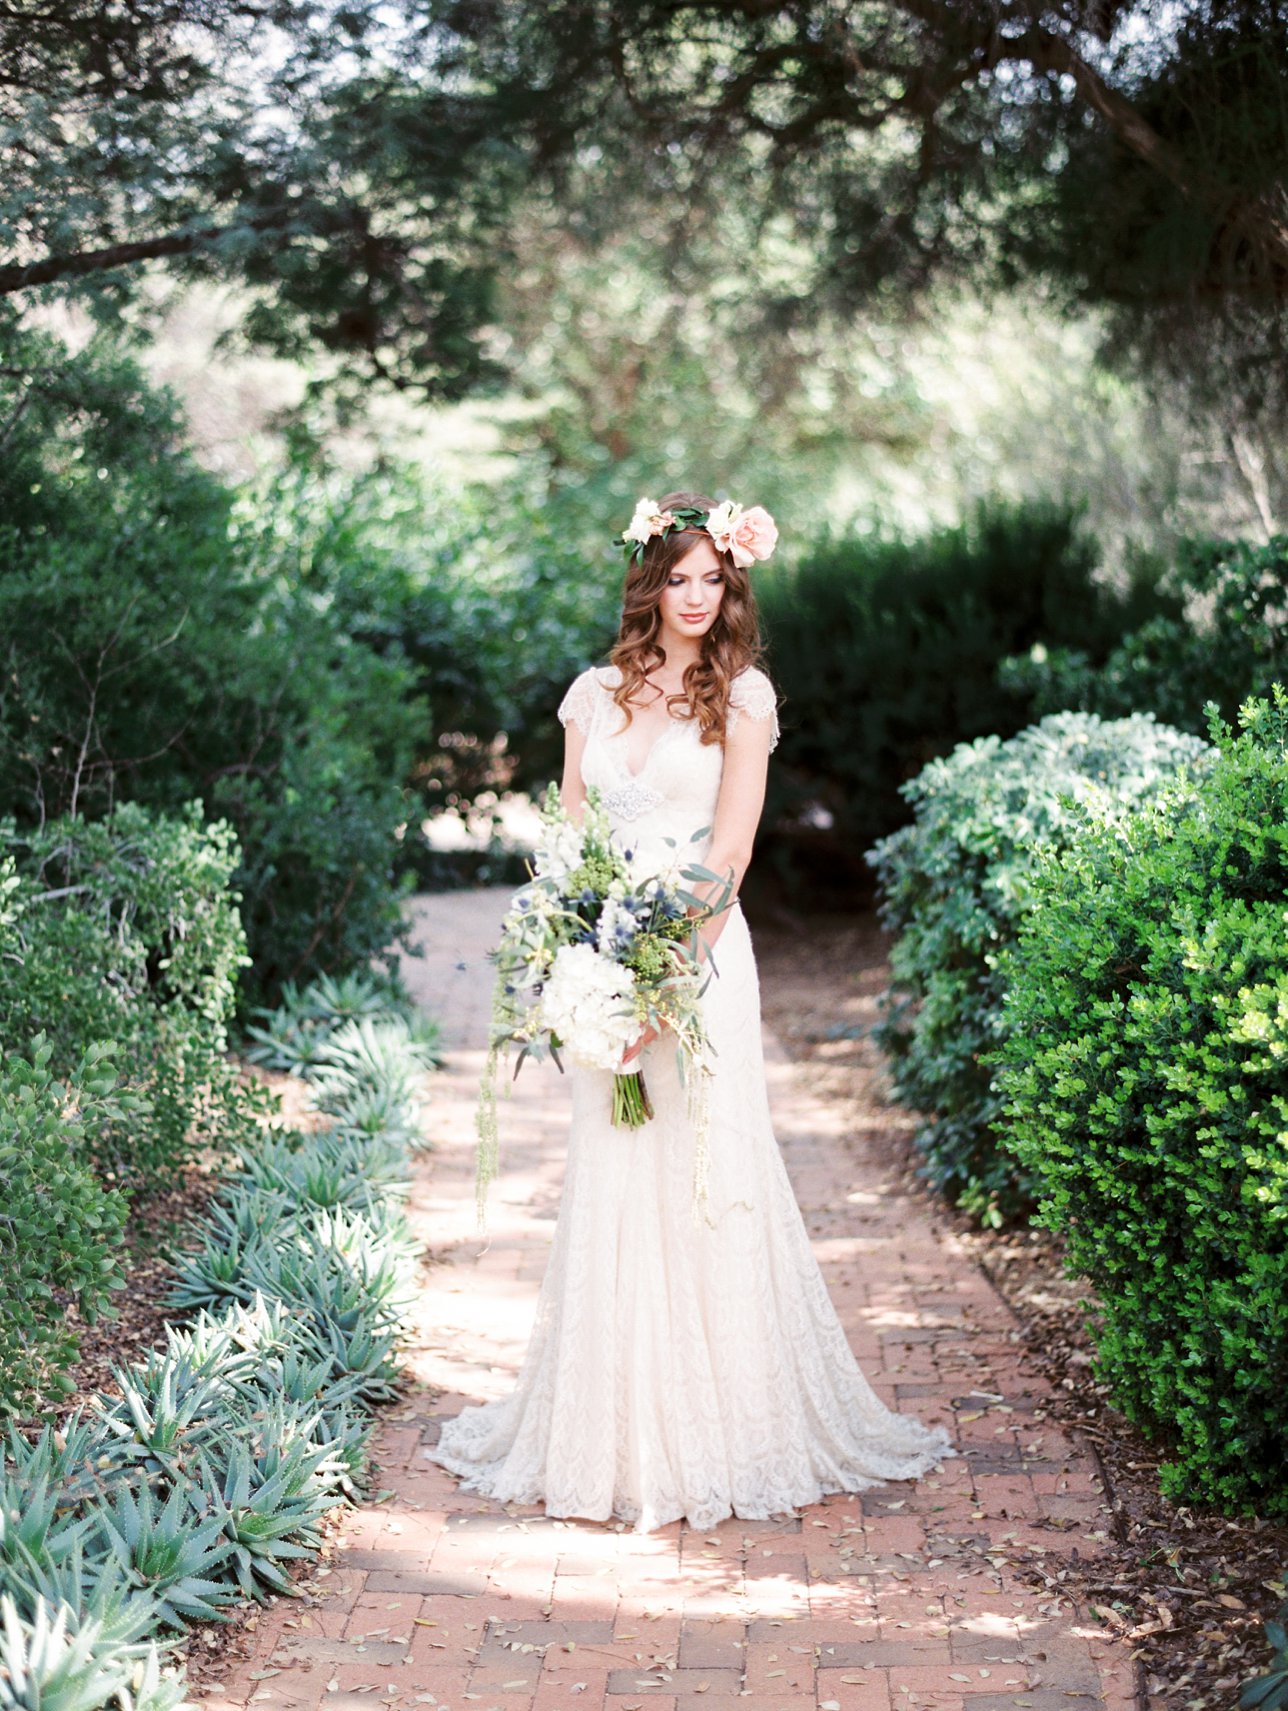 Arizona Weddings Magazine - Spring Romance - Part 1 - Blog | Rachel ...